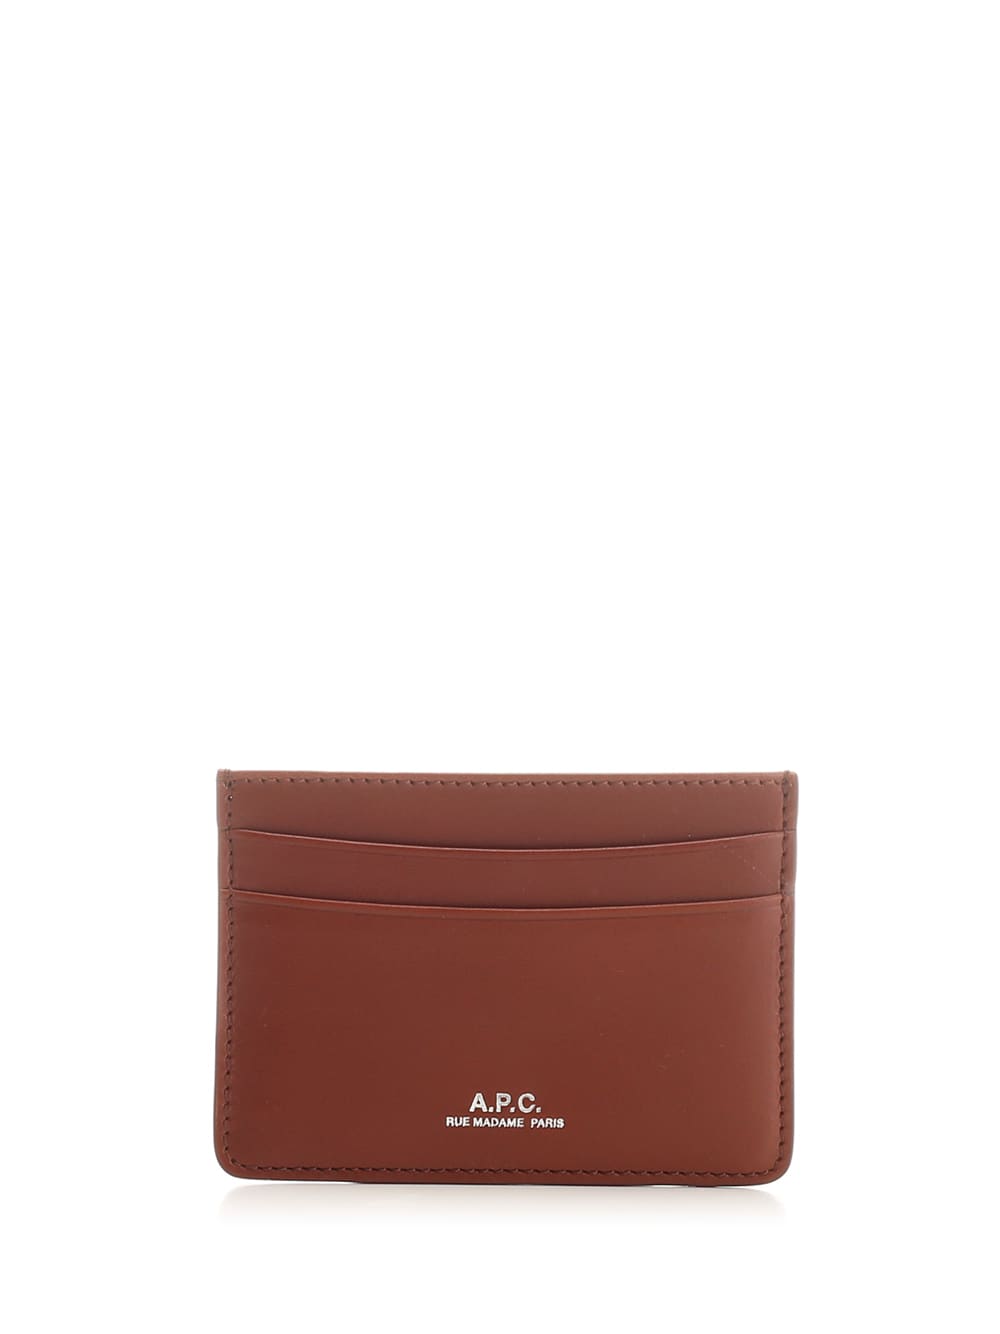 Apc Card Case Wallet In Brown